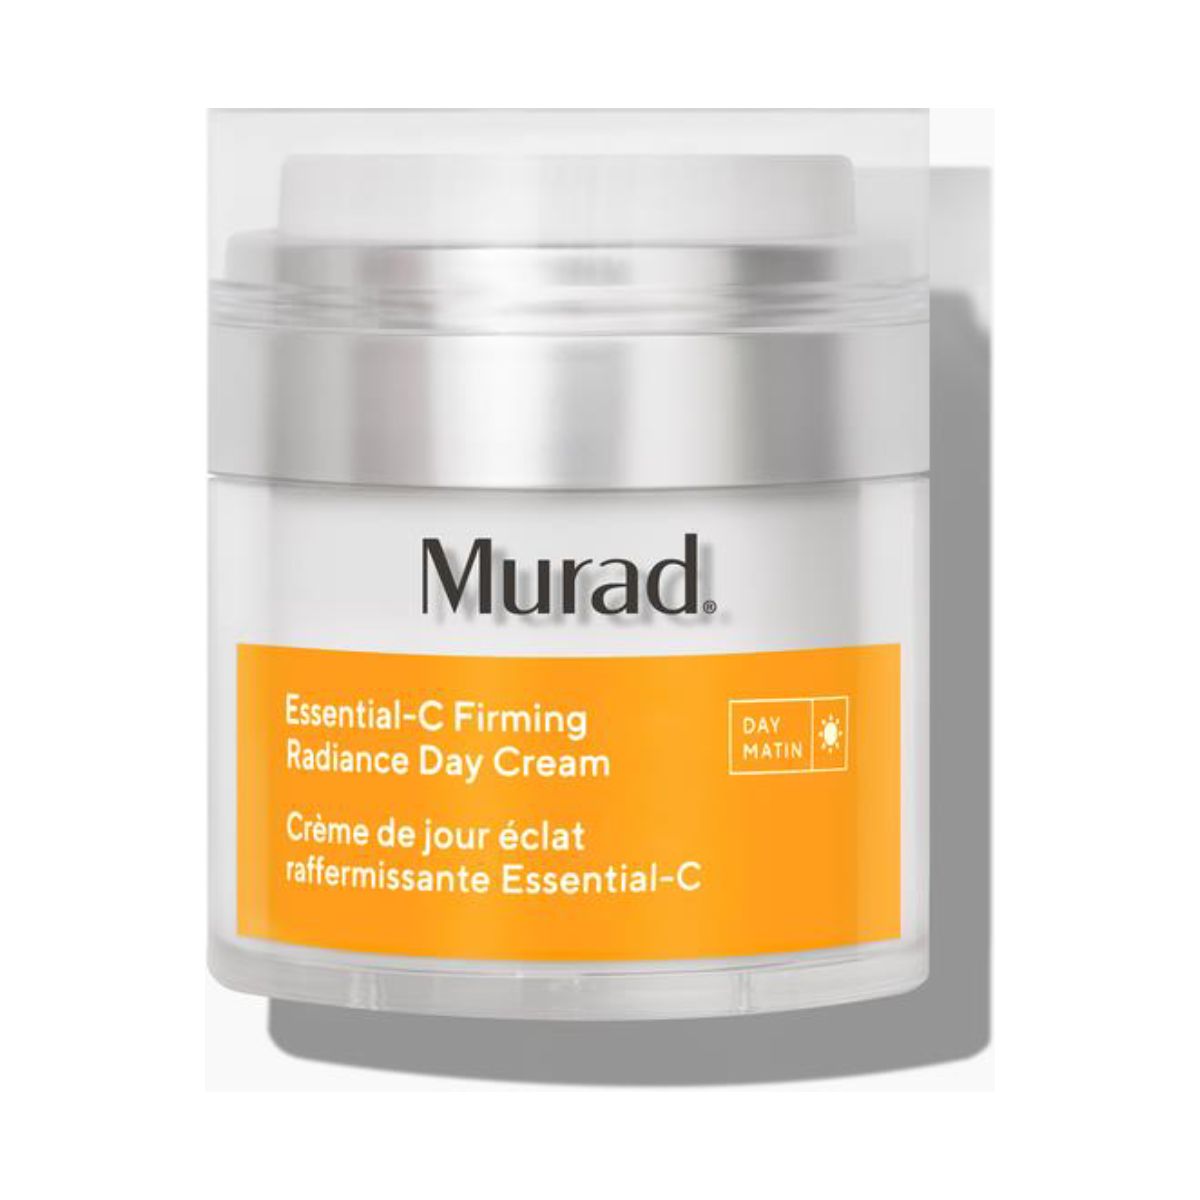 Murad Essential C Firming Radiance Day Cream